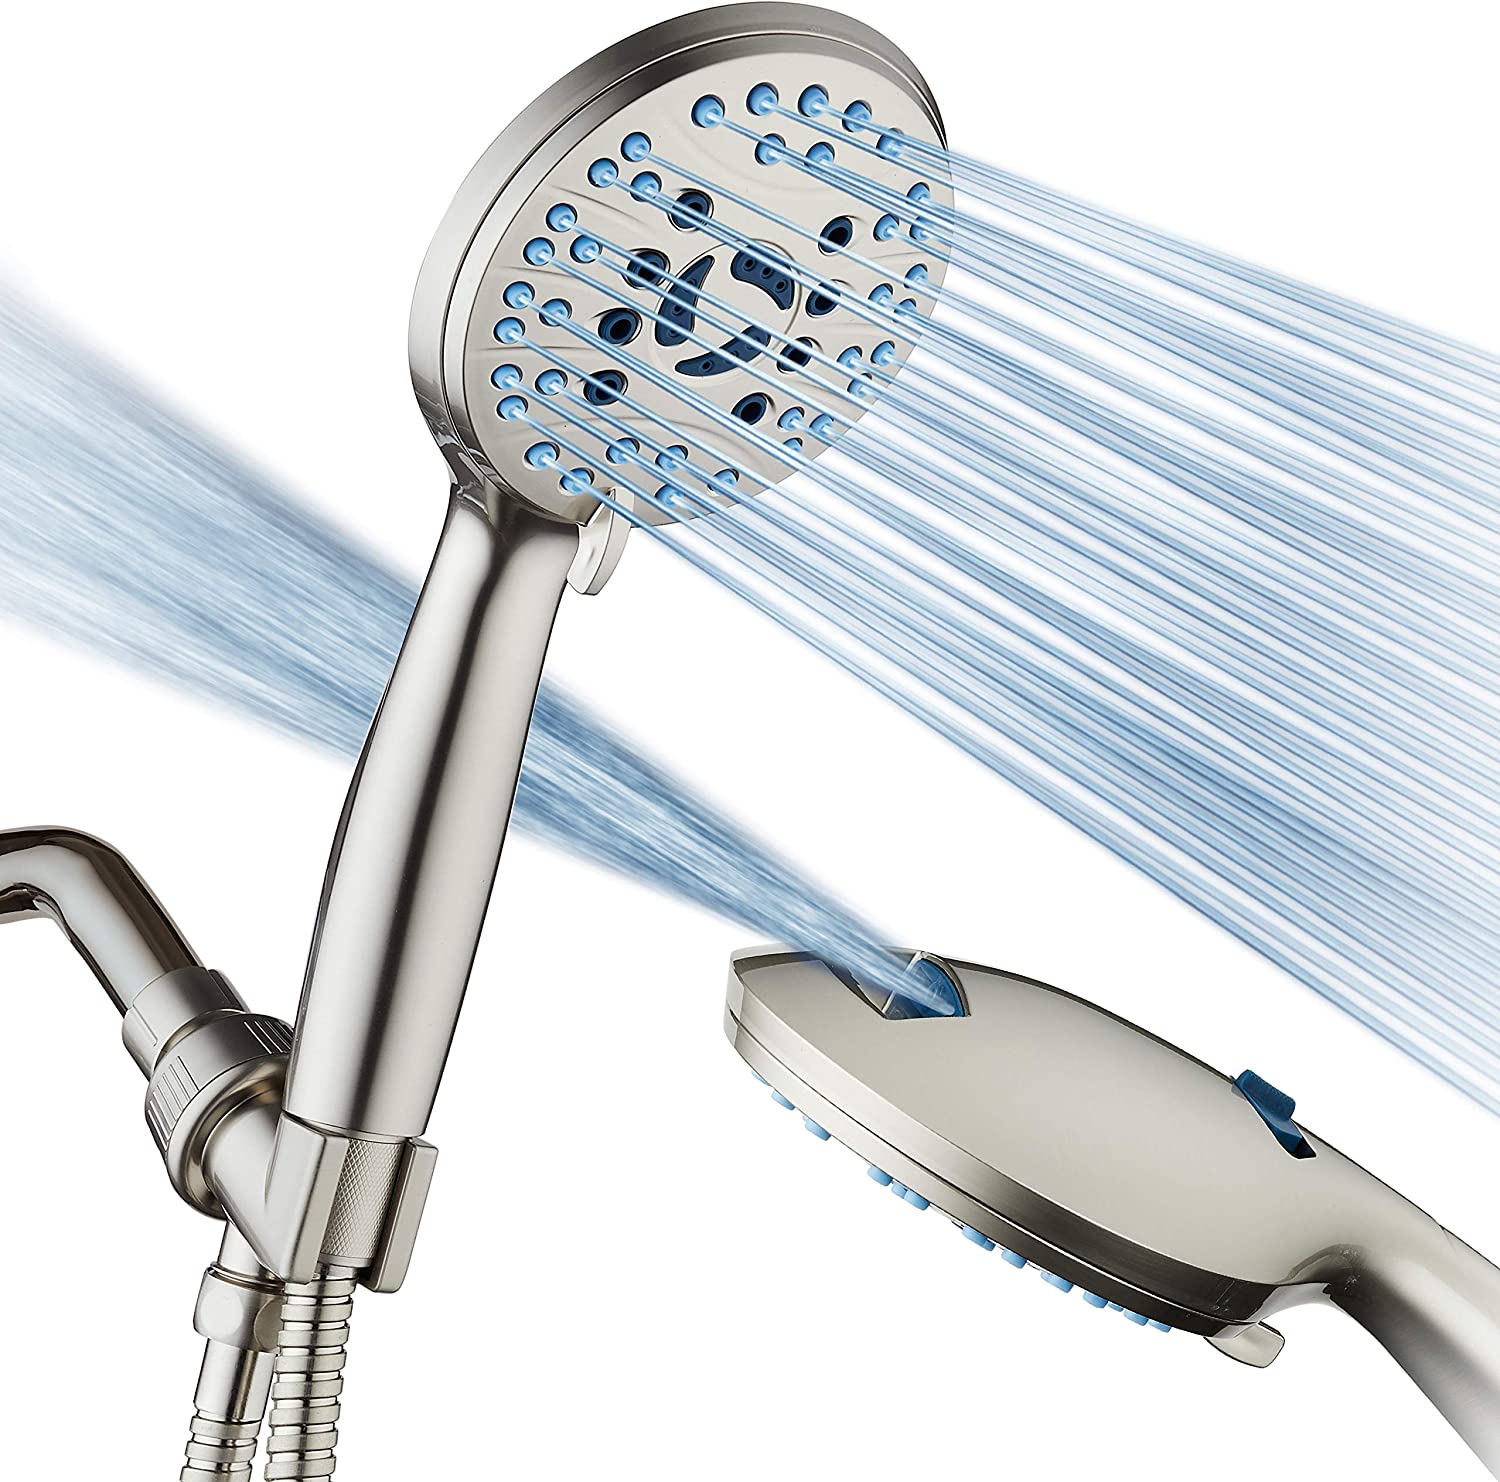 AquaCare Handheld shower head for low water pressure